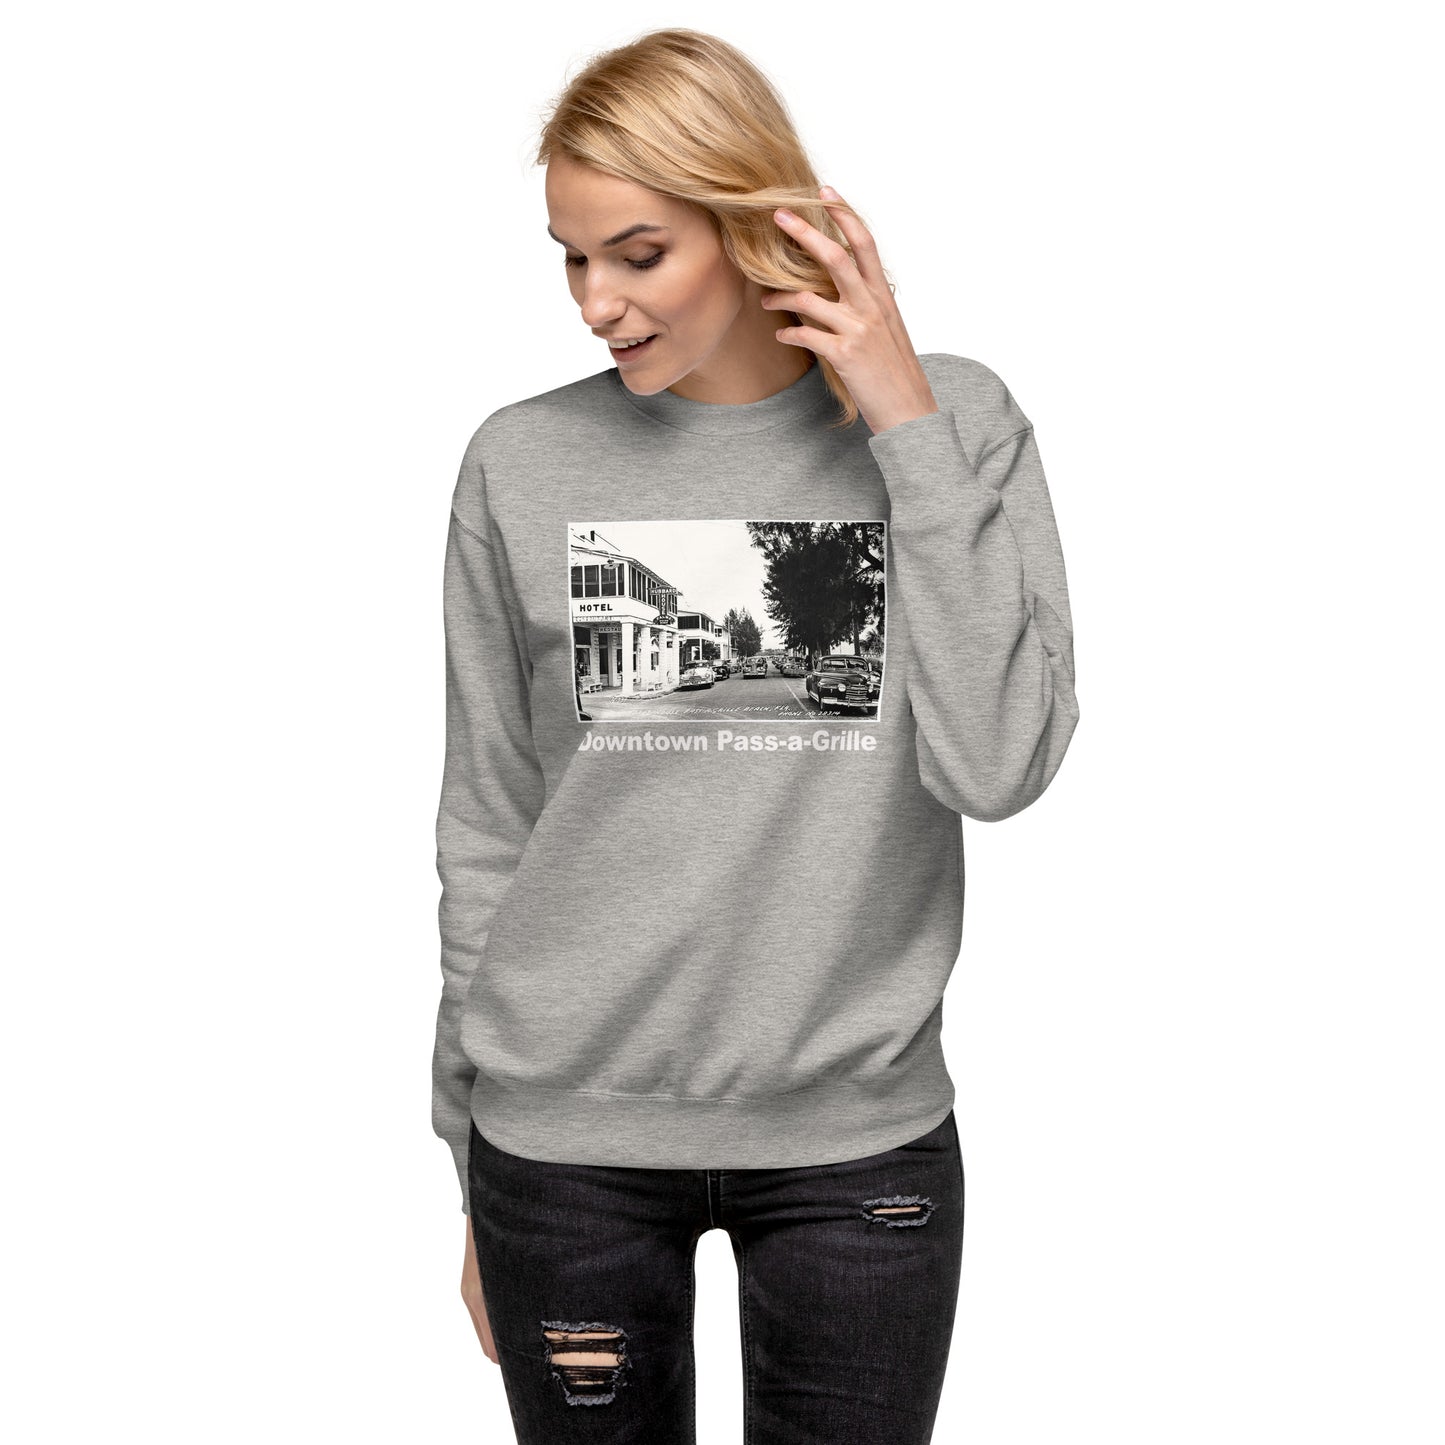 Downtown Pass-a-Grille Unisex Premium Sweatshirt